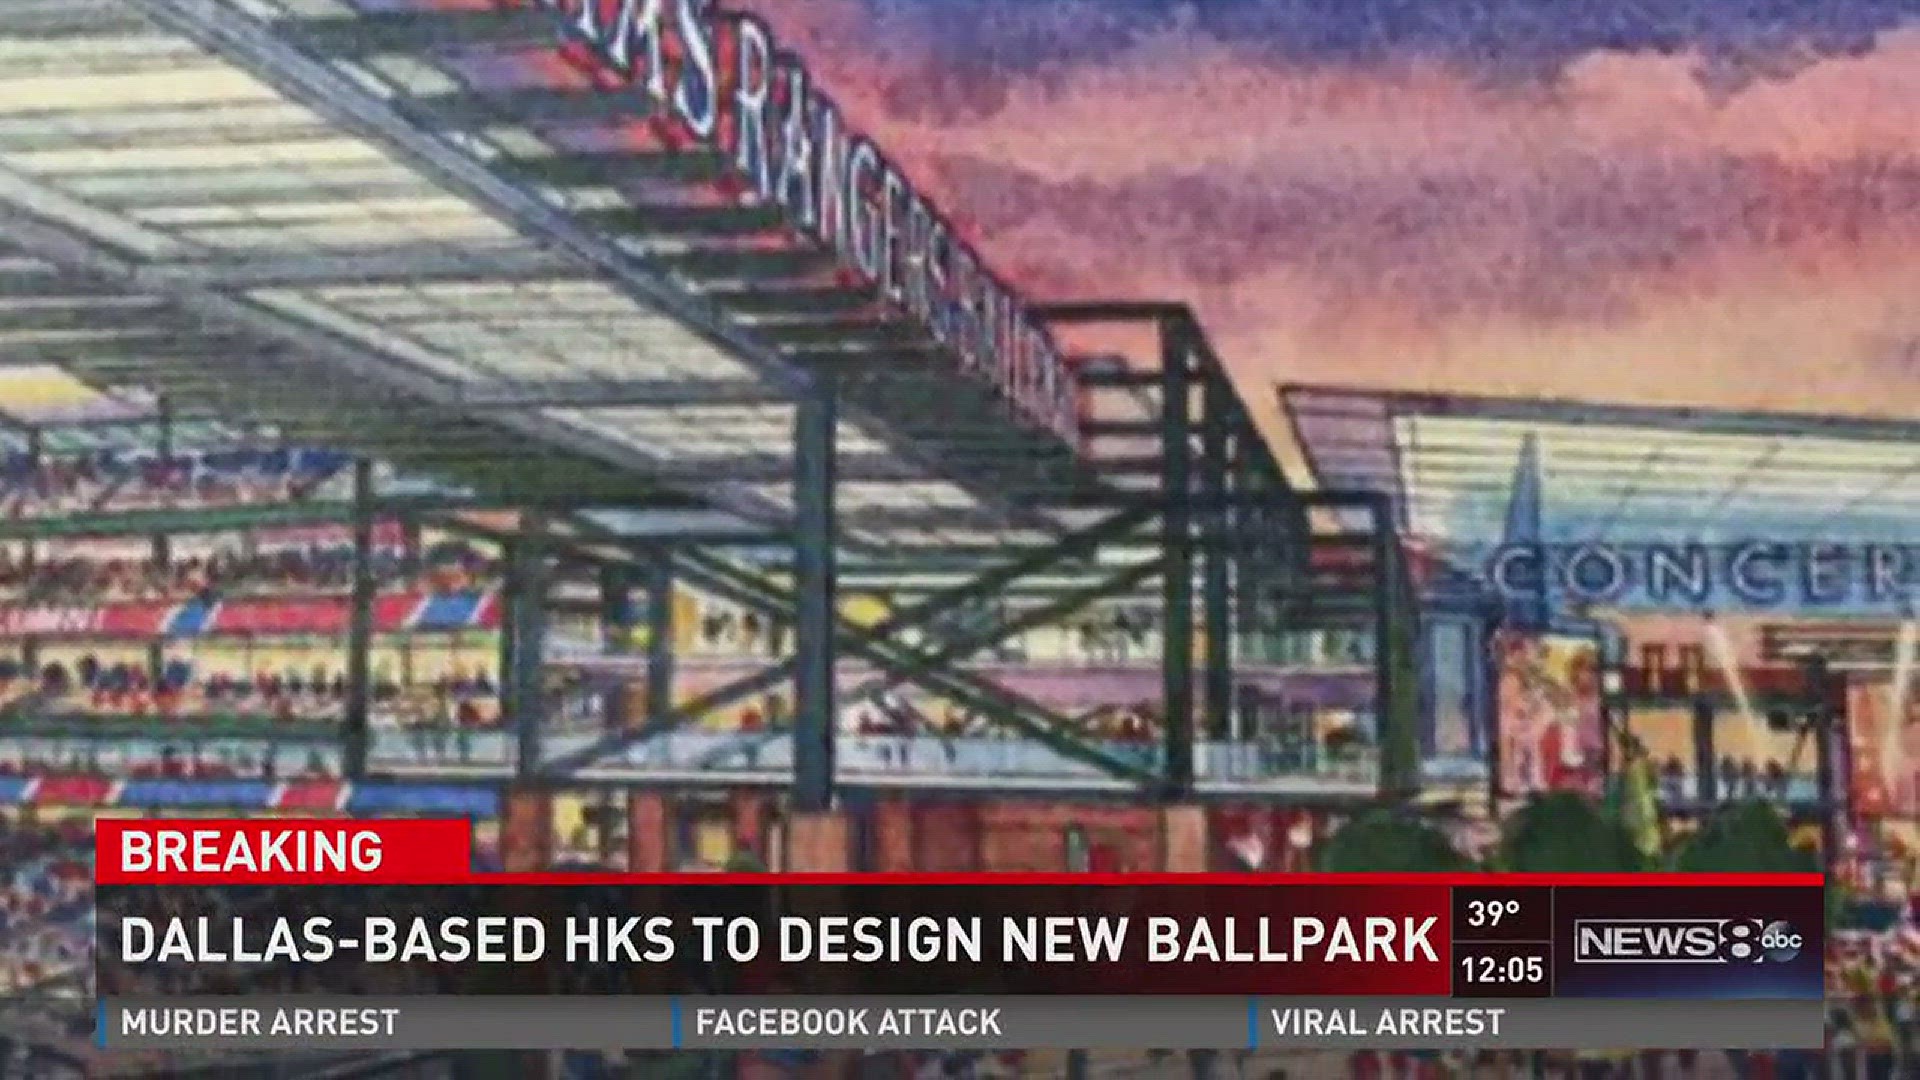 Dallas-based HKS to design new ballpark